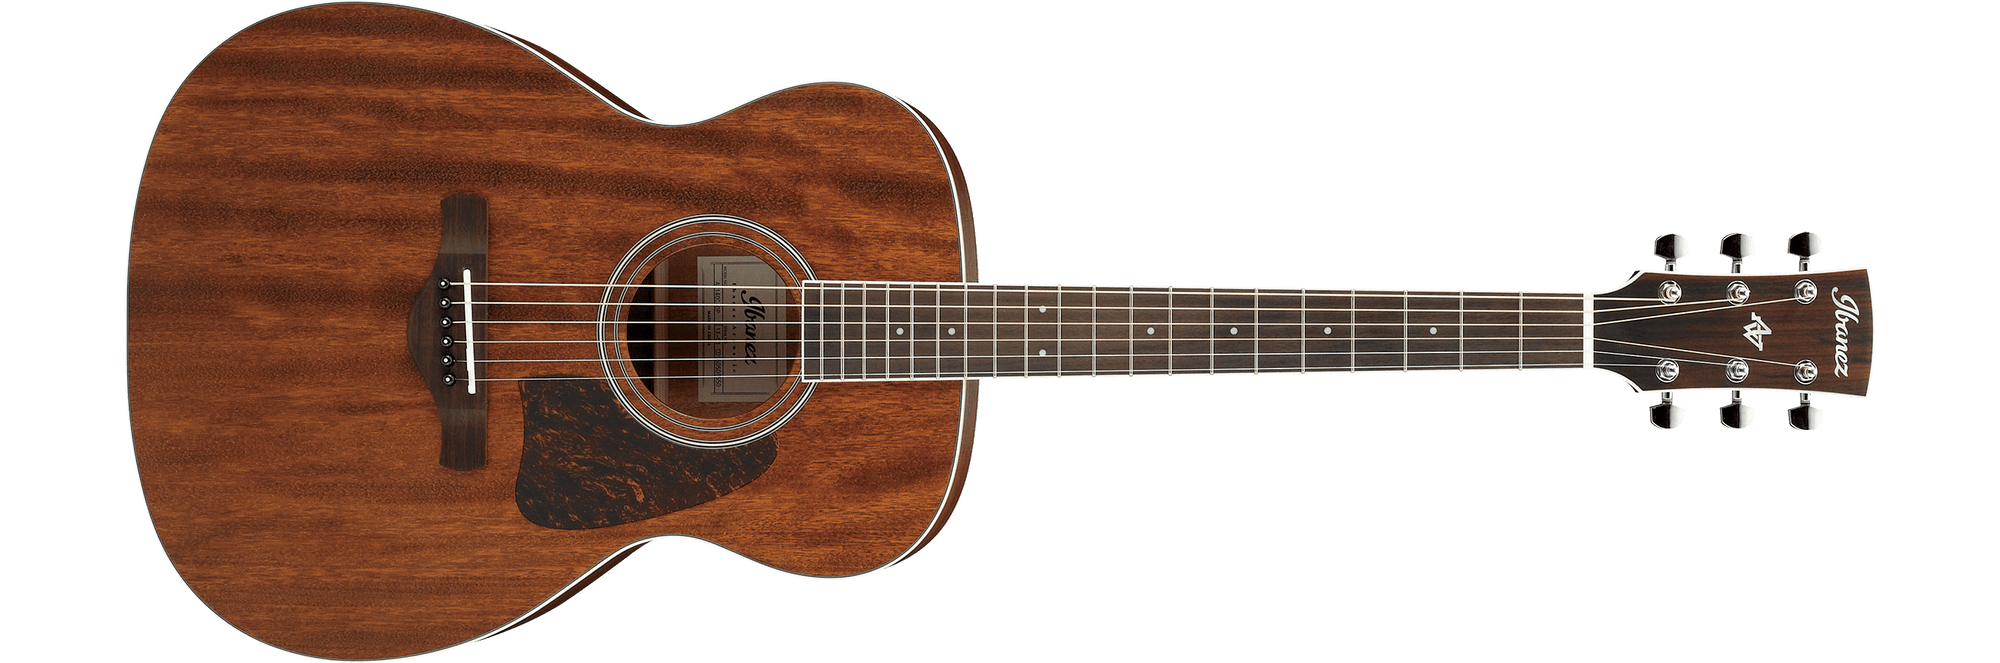 Artwood Grand Concert Acoustic Guitar - Open Pore Natural